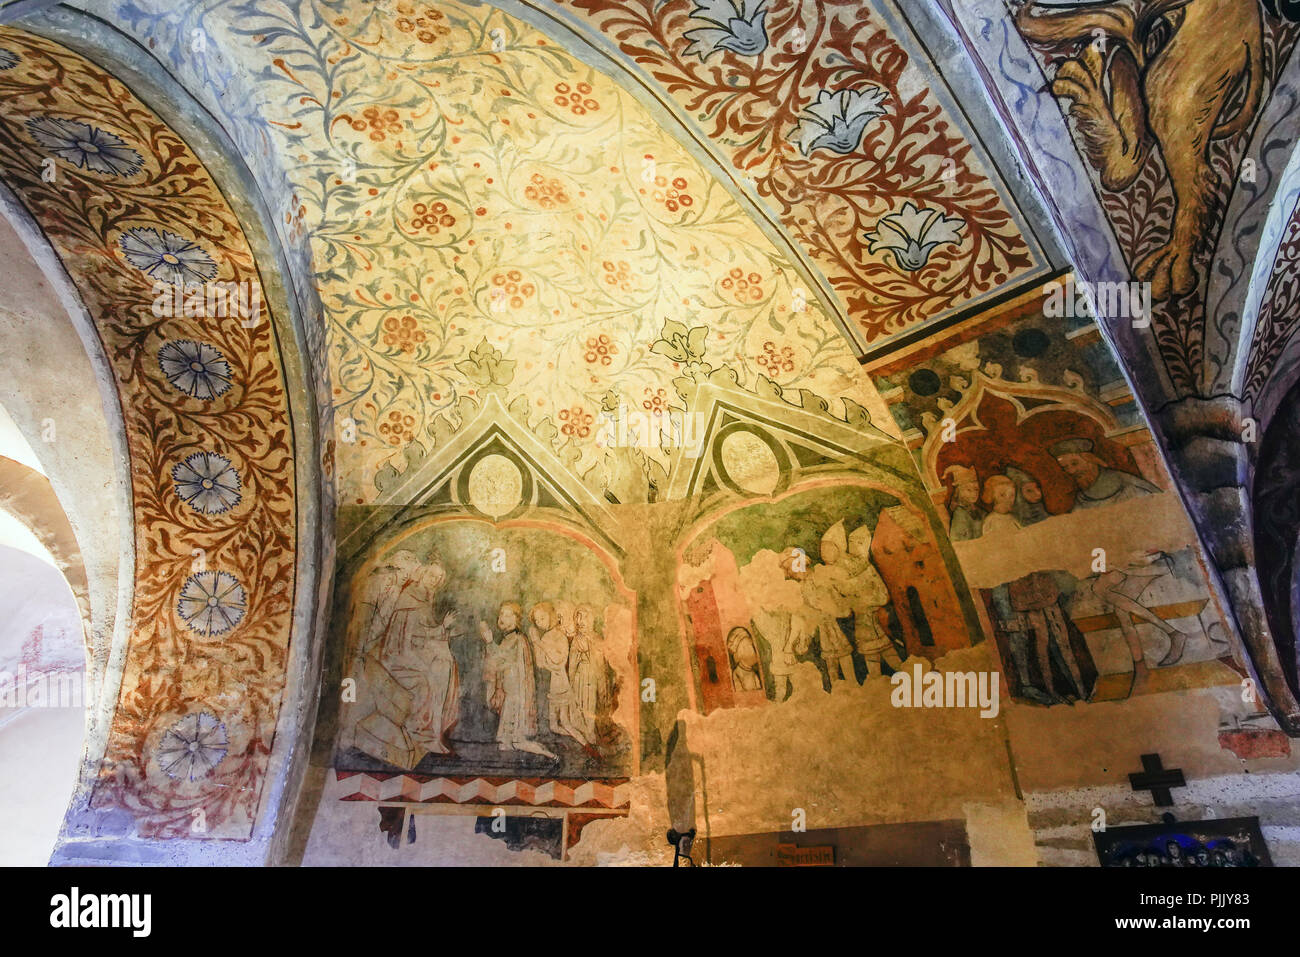 Wandmalereien in St. Peter und Paul Kirche in Ottmarsheim, XI Jahrhundert, Elsass, Frankreich. Stockfoto